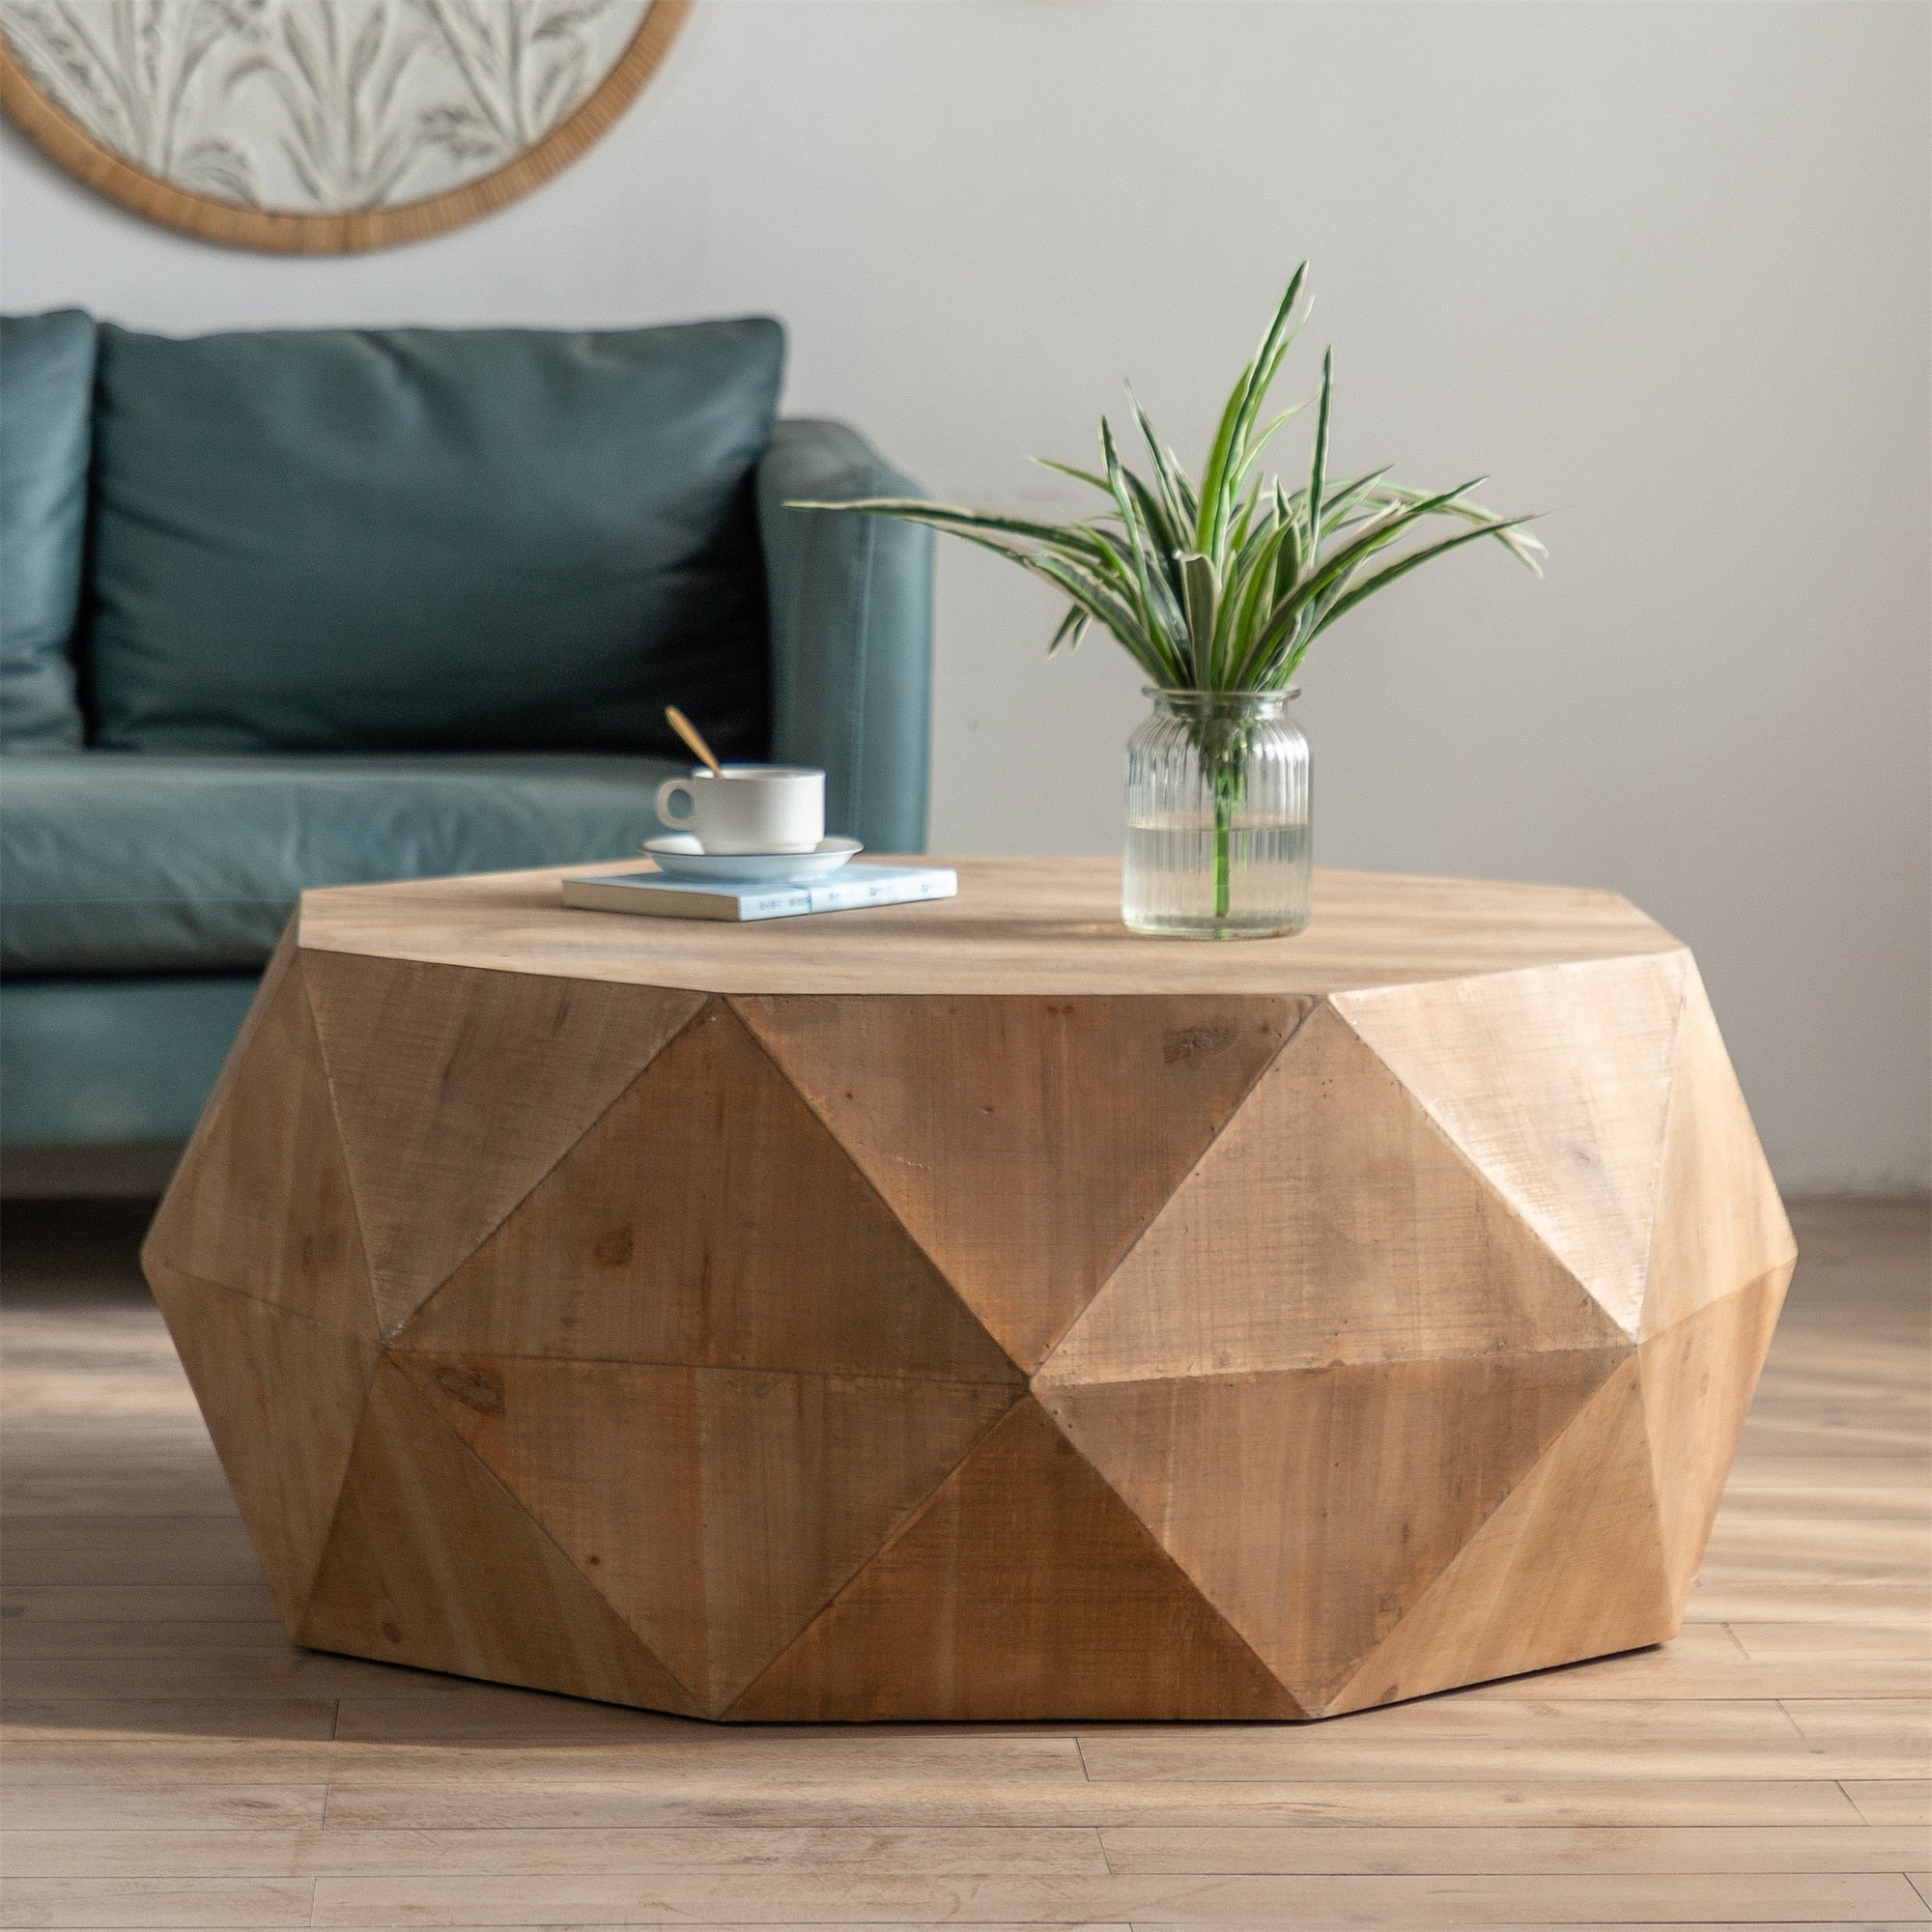 Homio Decor Living Room Three-Dimensional Embossed Coffee Table